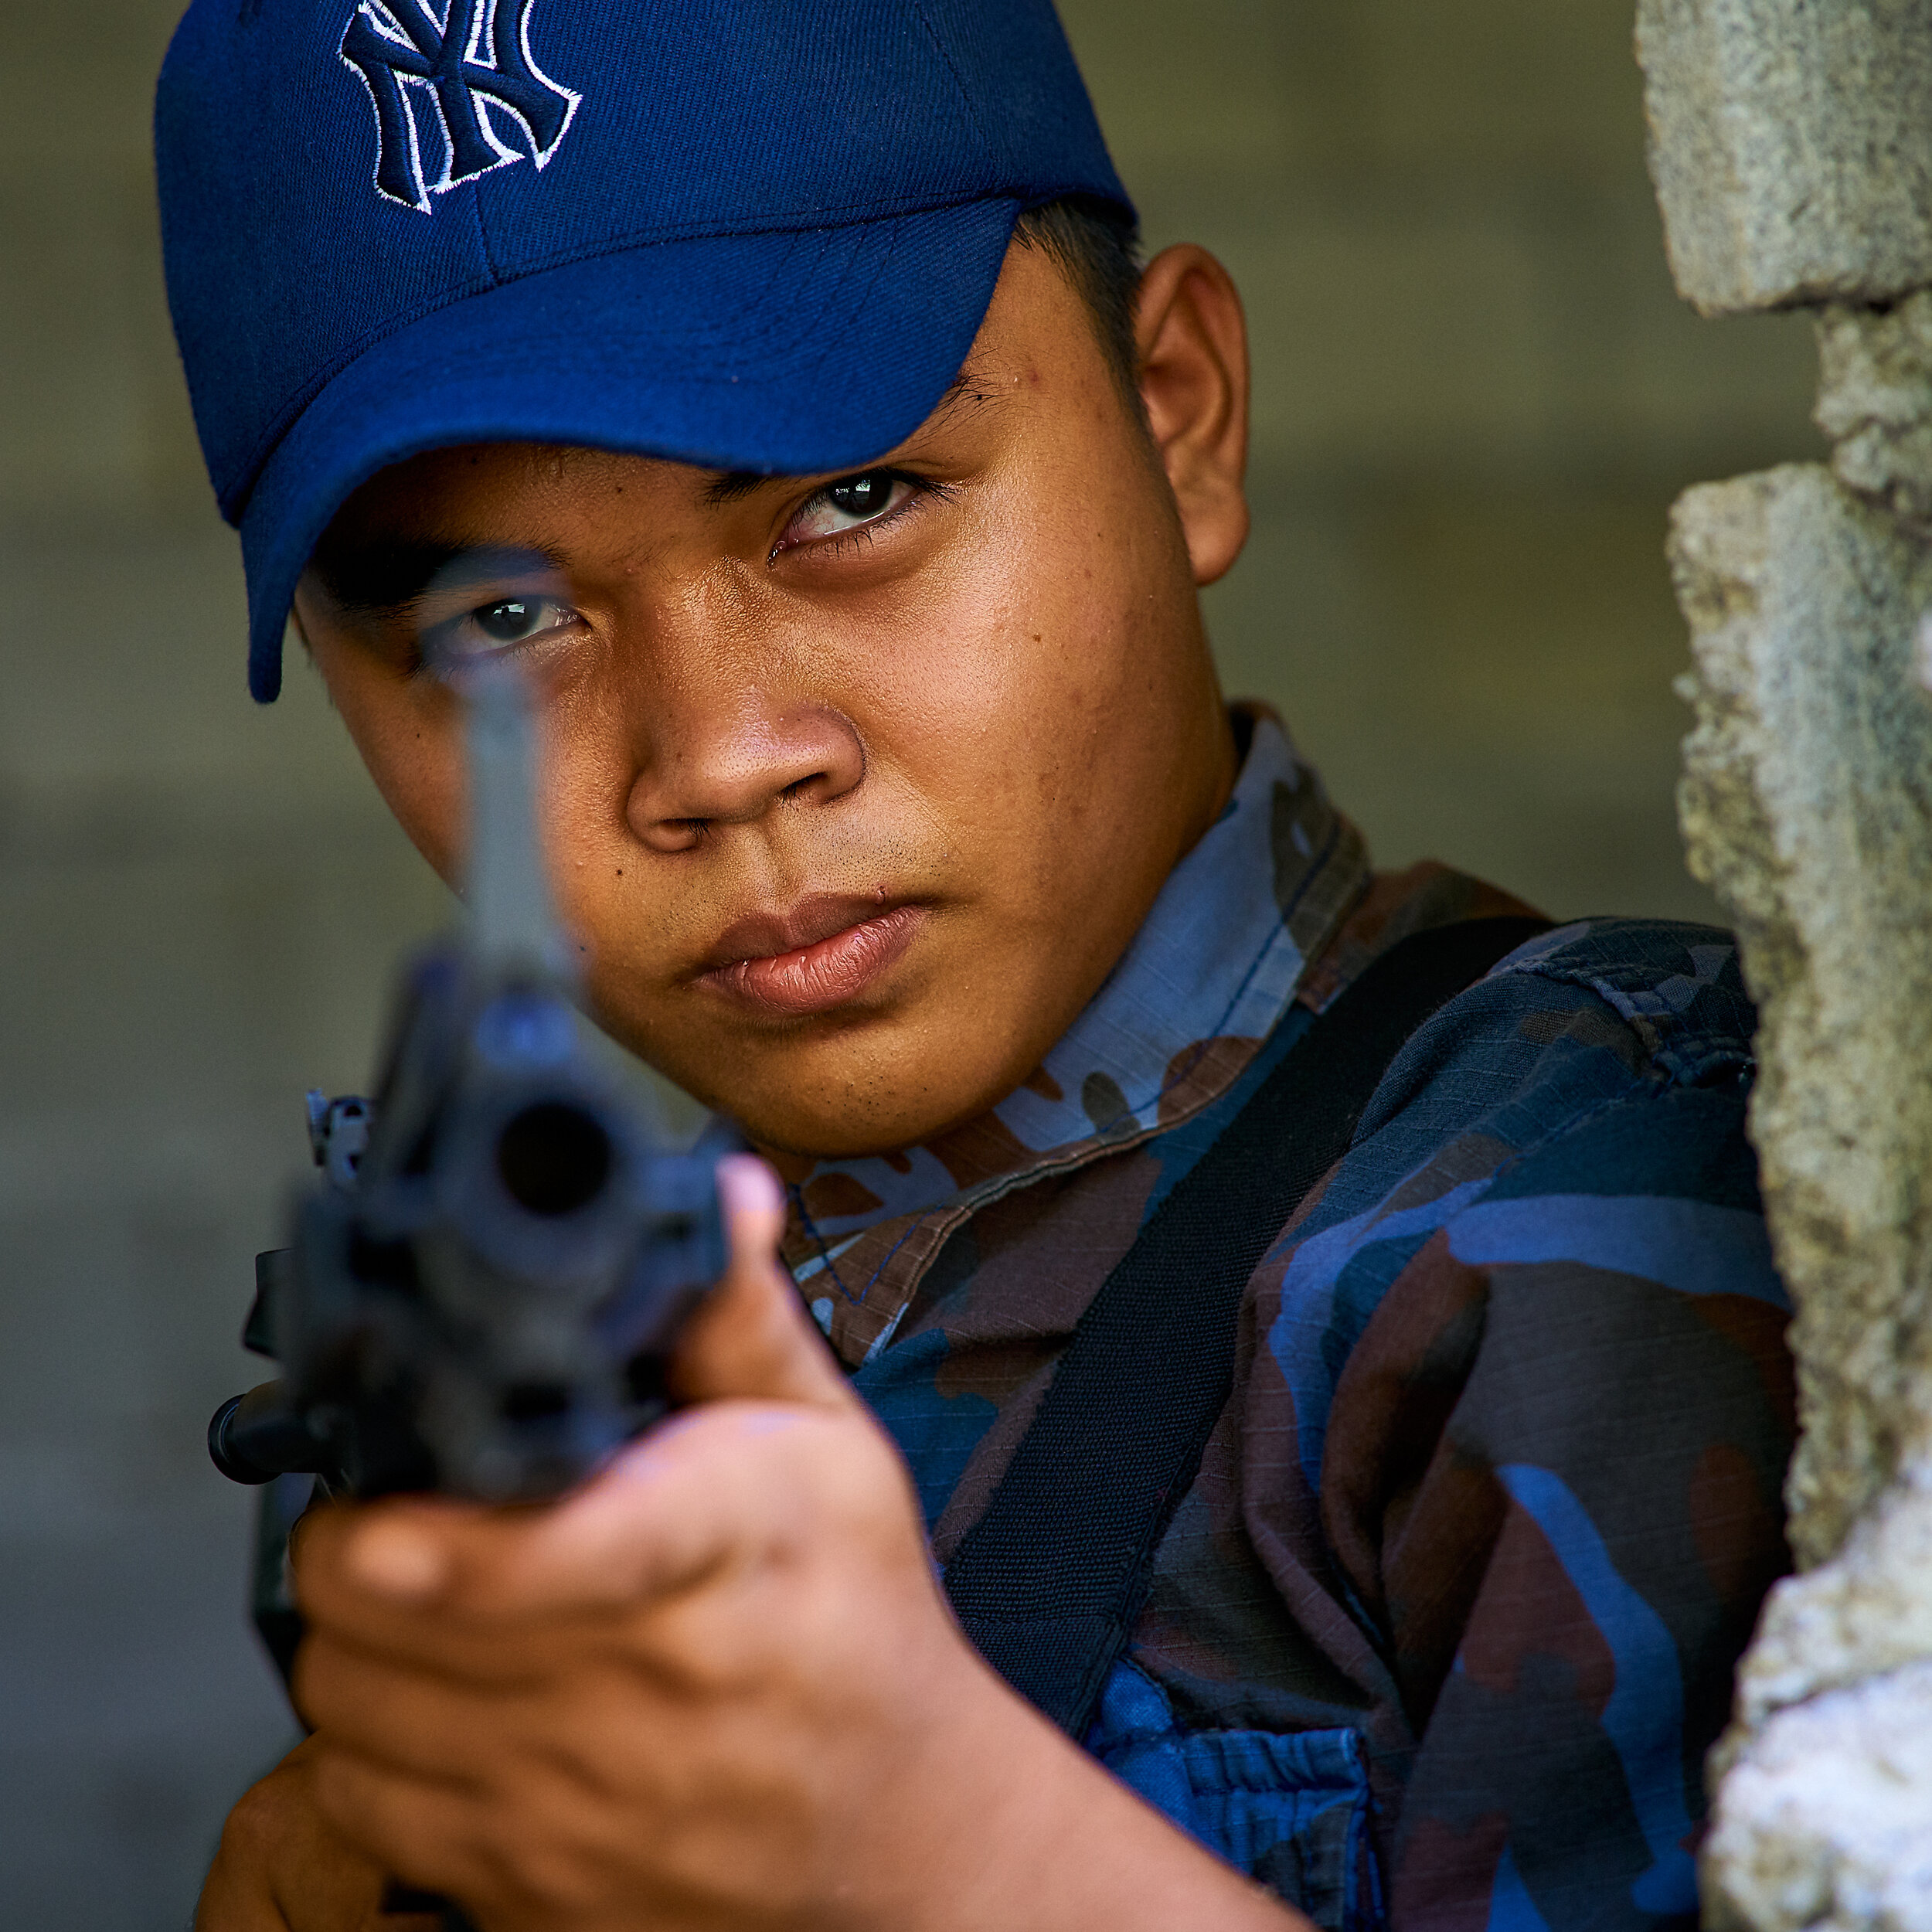 Photo by Bryon Lippincott (2019) “A Child Soldier in Mindanao”